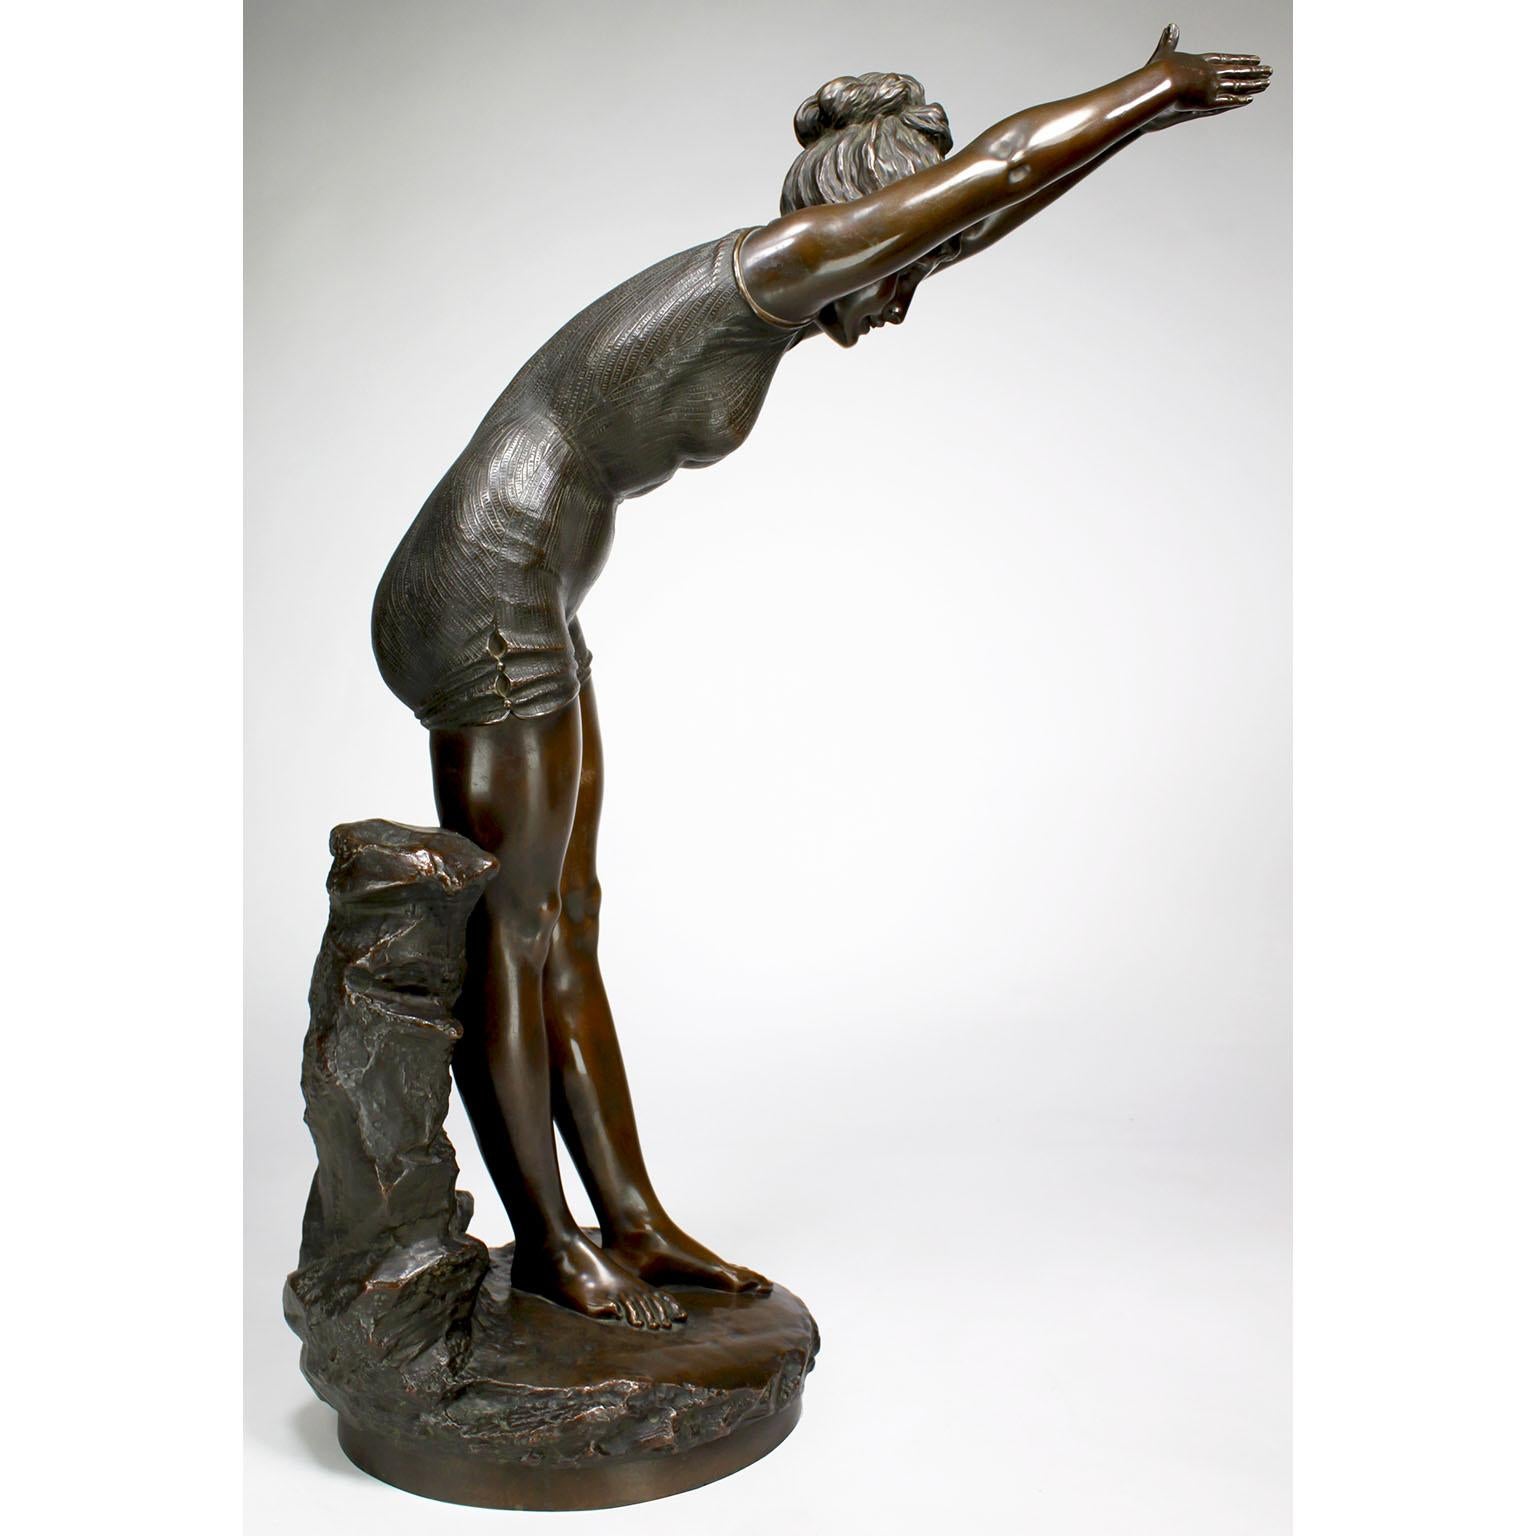 After Odoardo Tabacchi (1831-1905) a very fine Italian 19th century patinated bronze figure of 